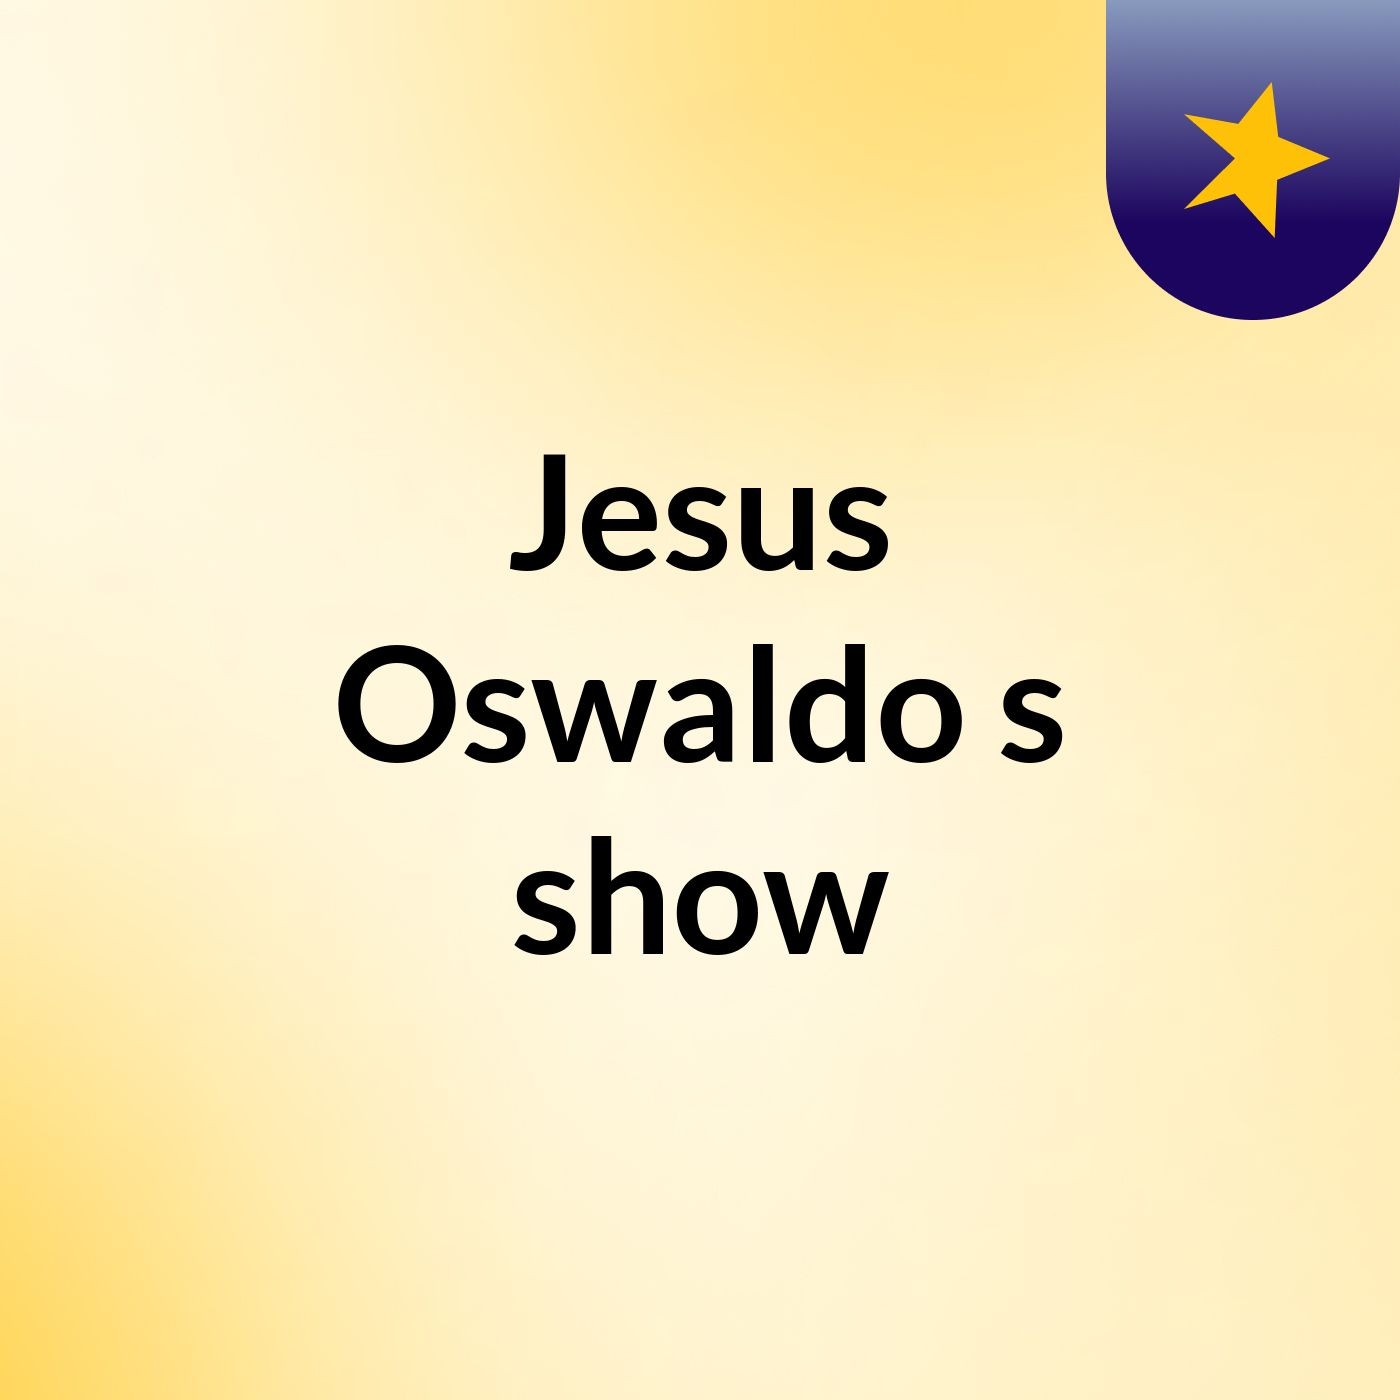 Jesus Oswaldo's show